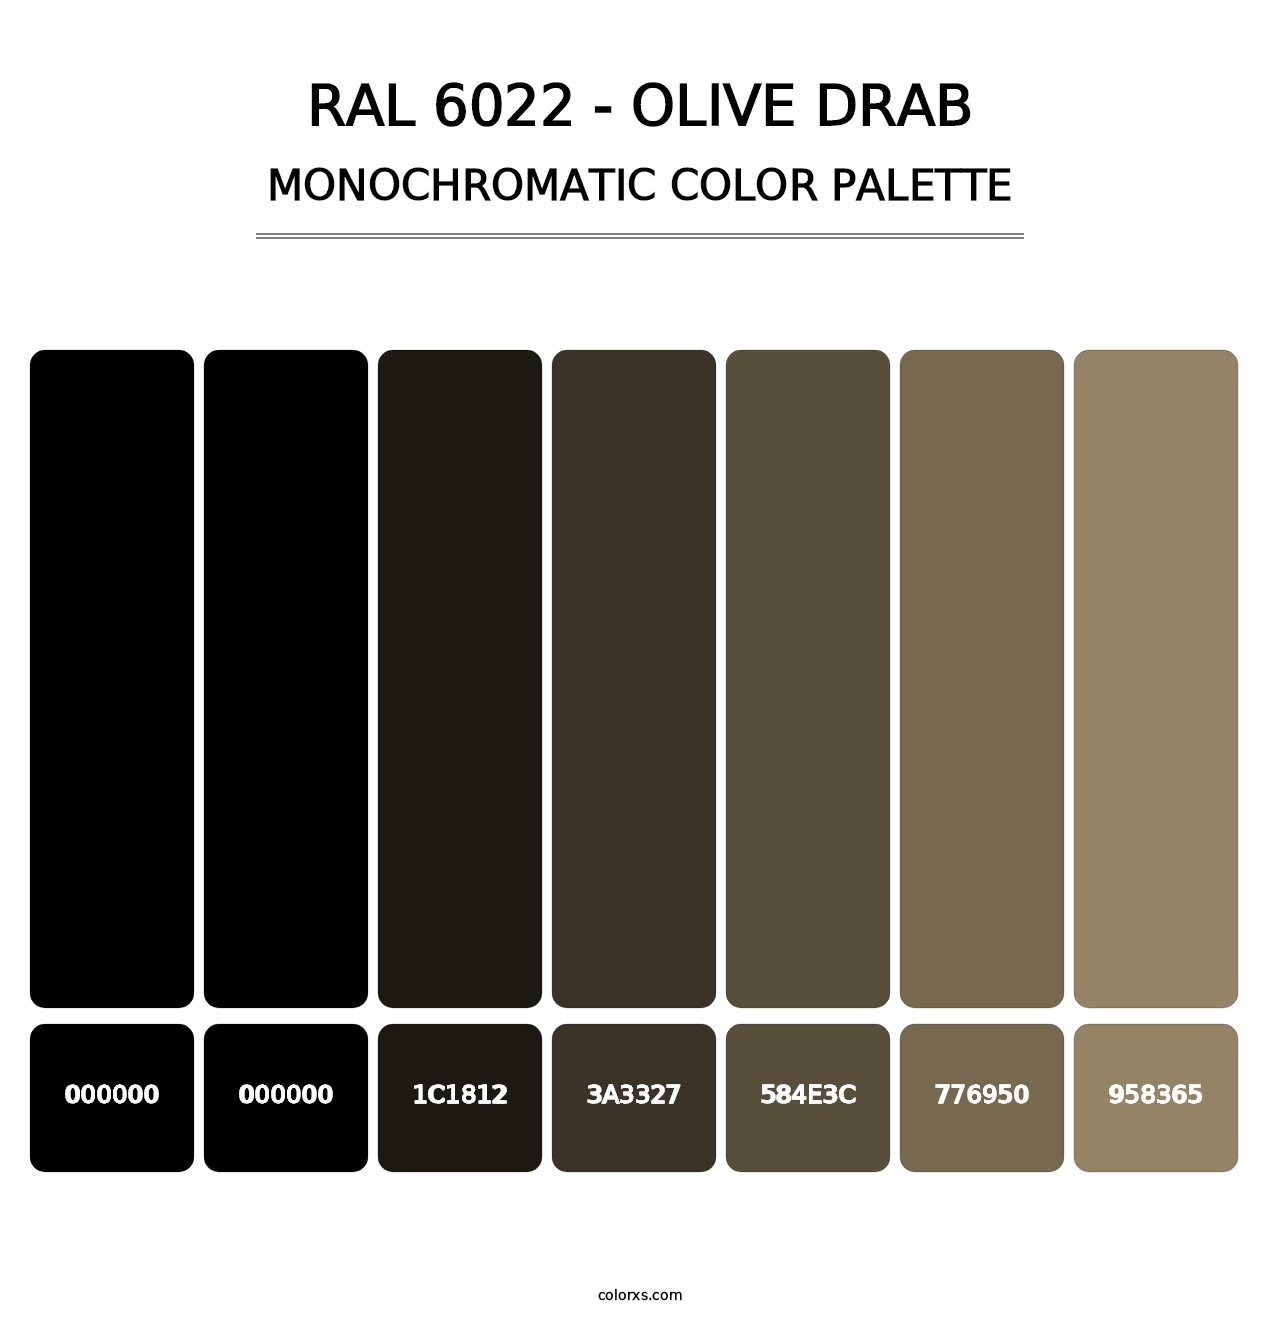 RAL 6022 - Olive Drab - Monochromatic Color Palette